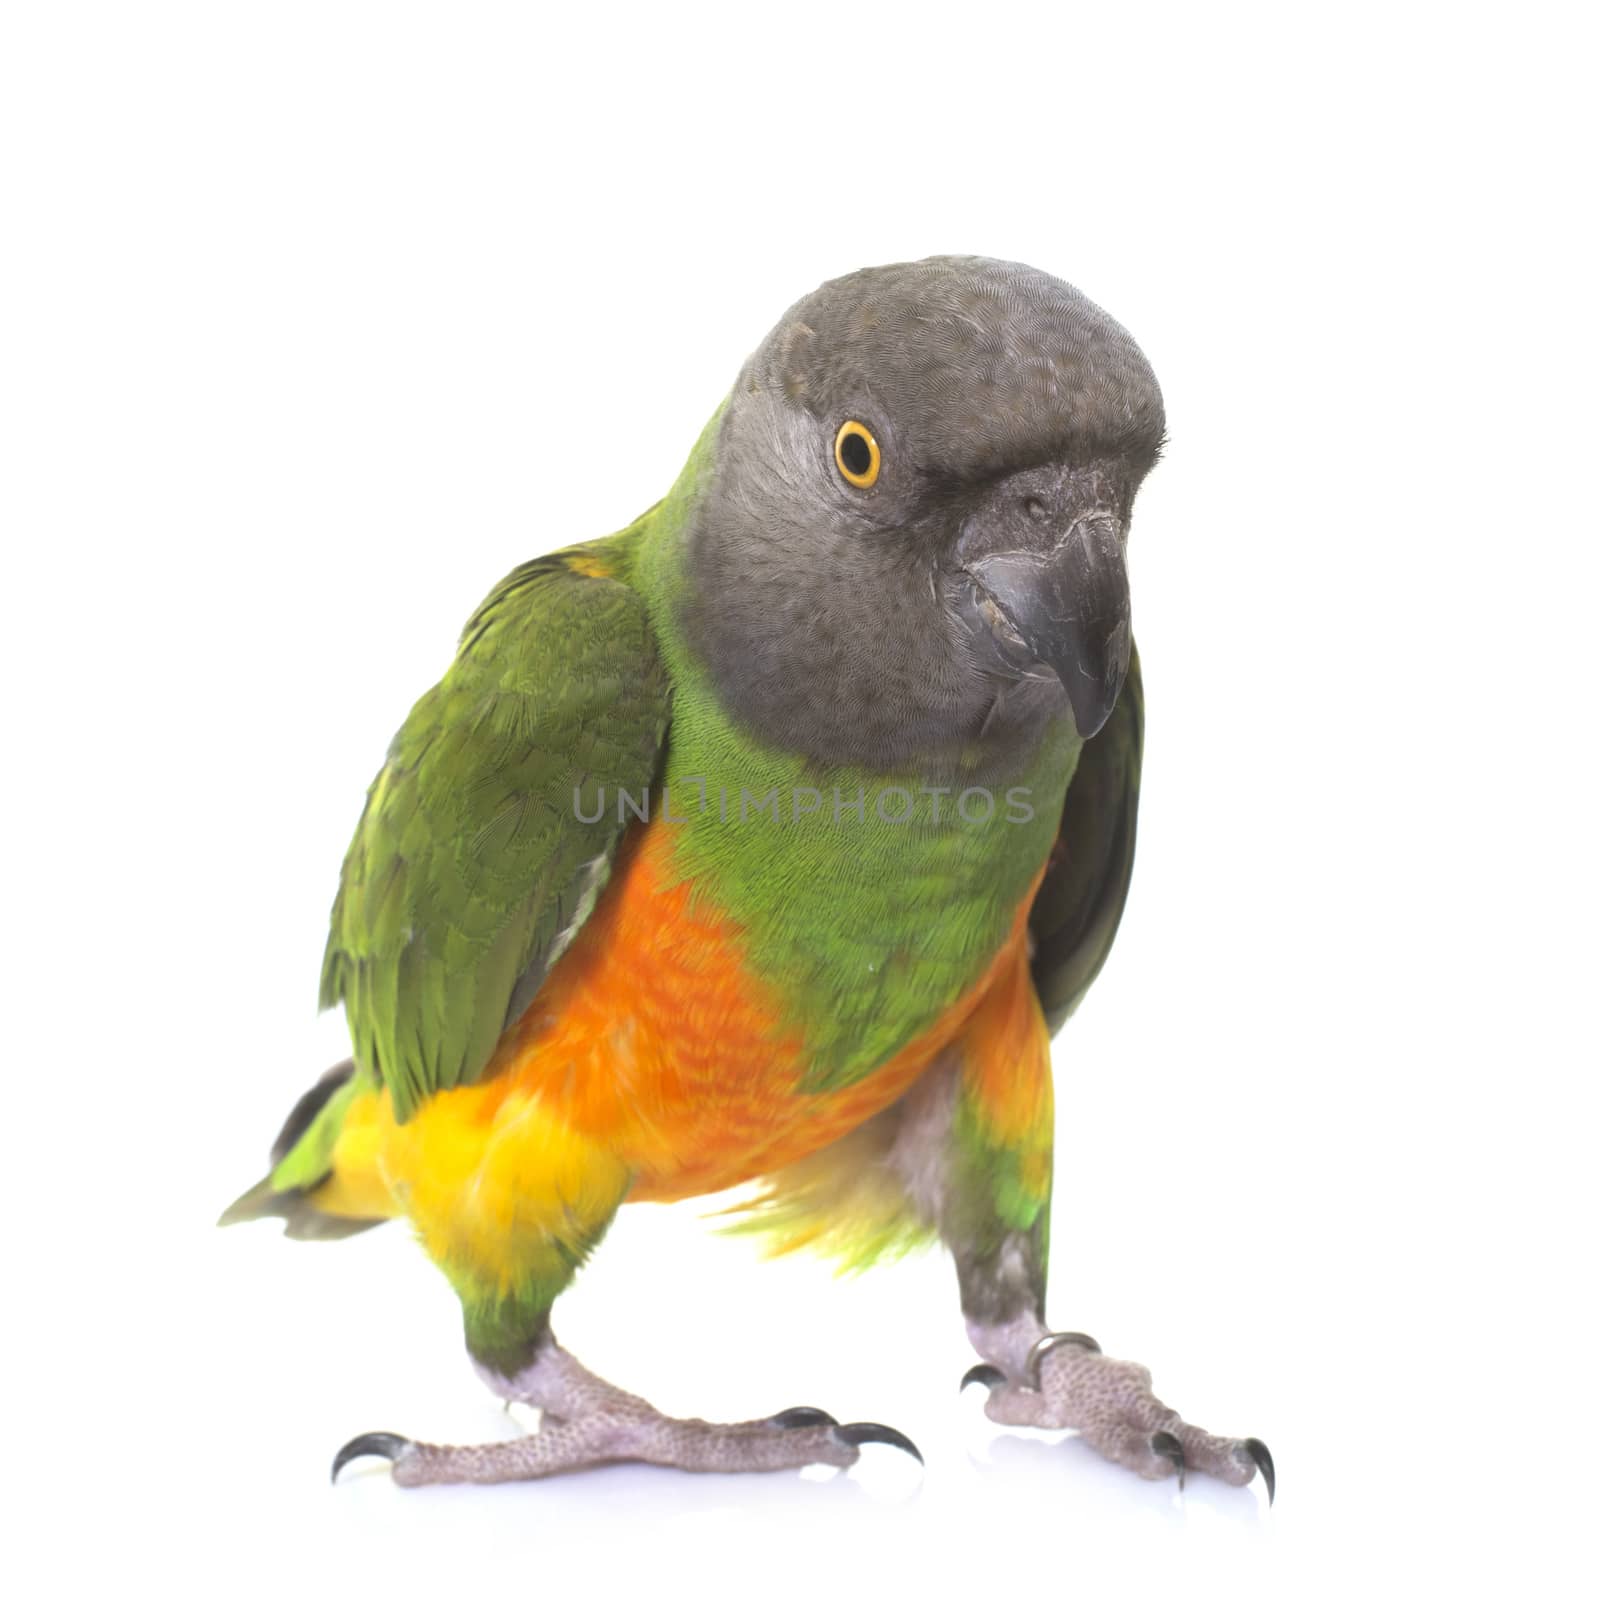 senegal parrot in studio by cynoclub